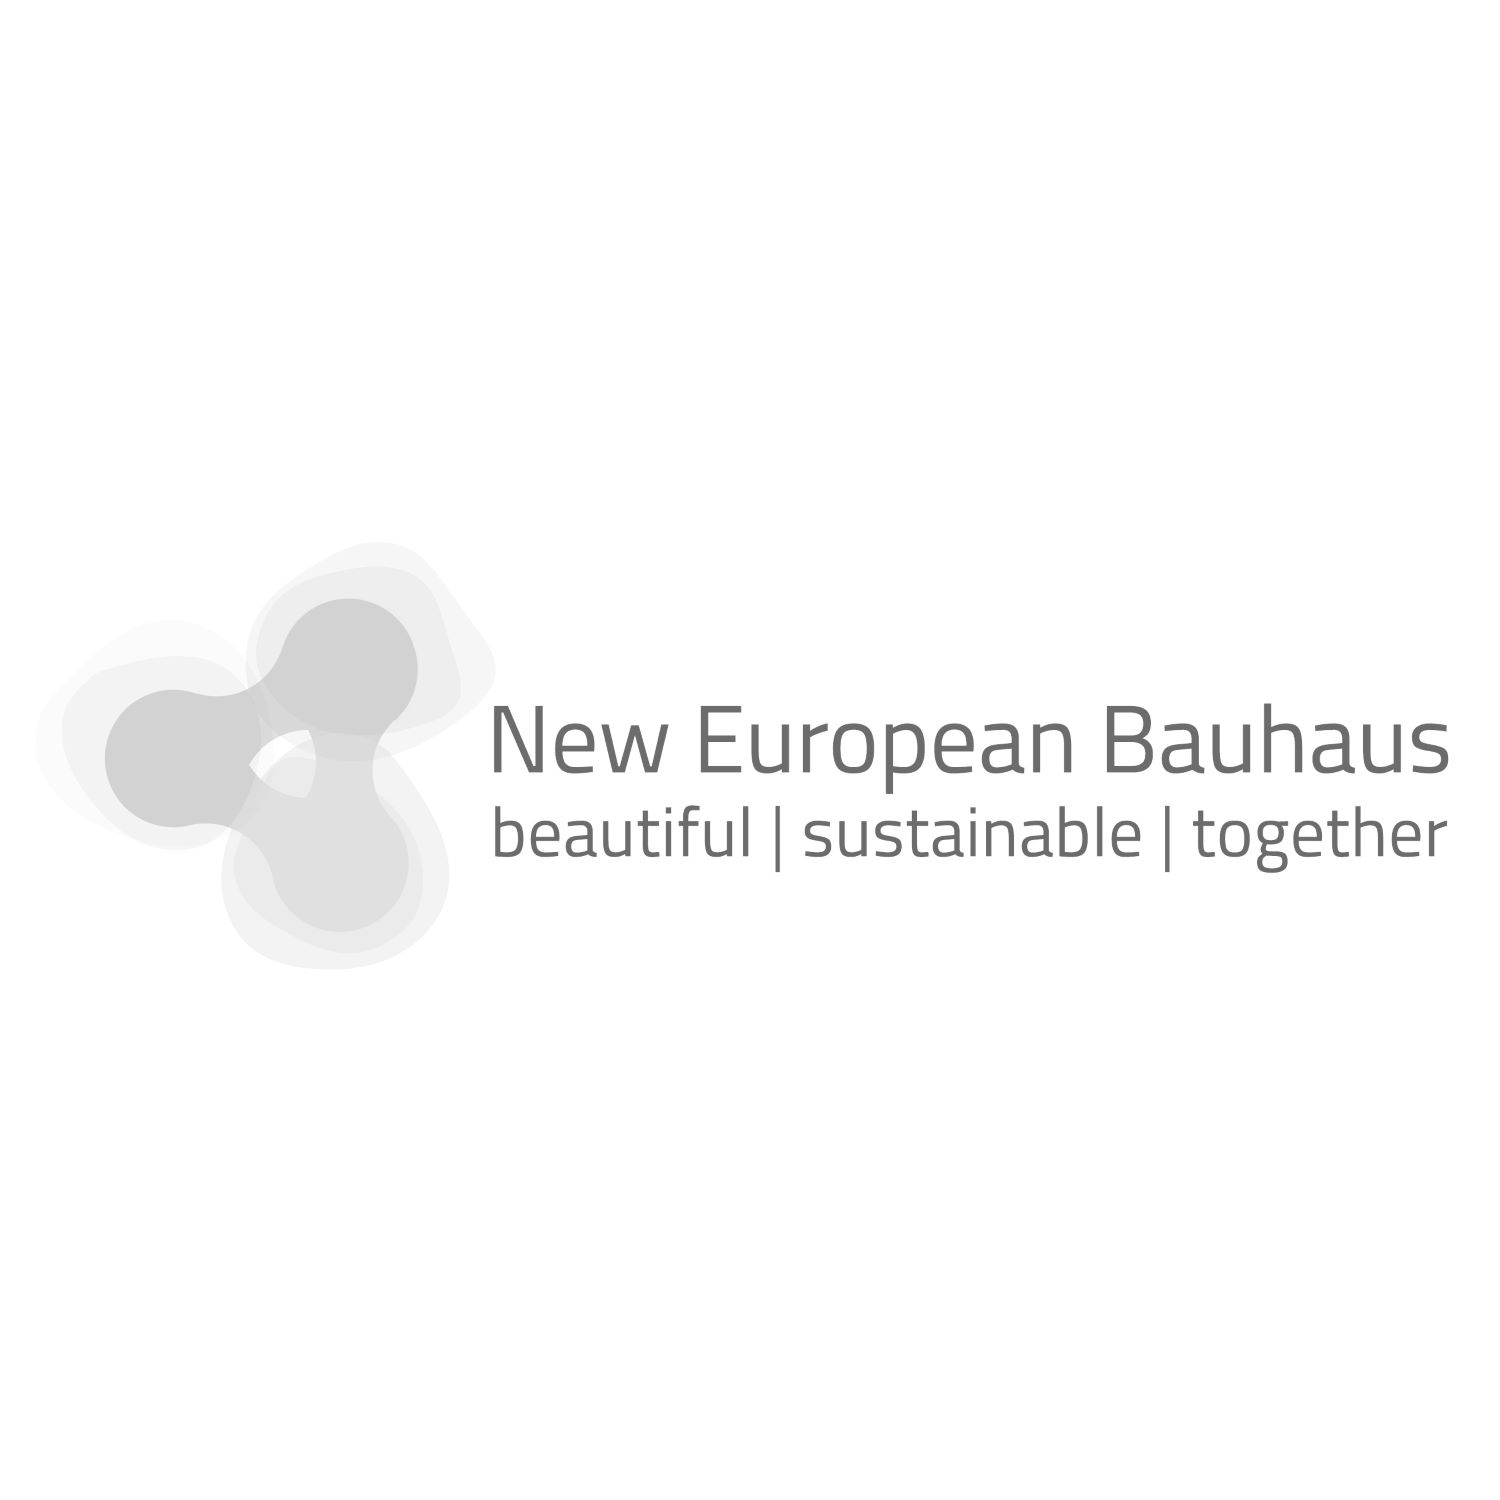 New European Bauhaus Logo, beautiful, sustainable, together